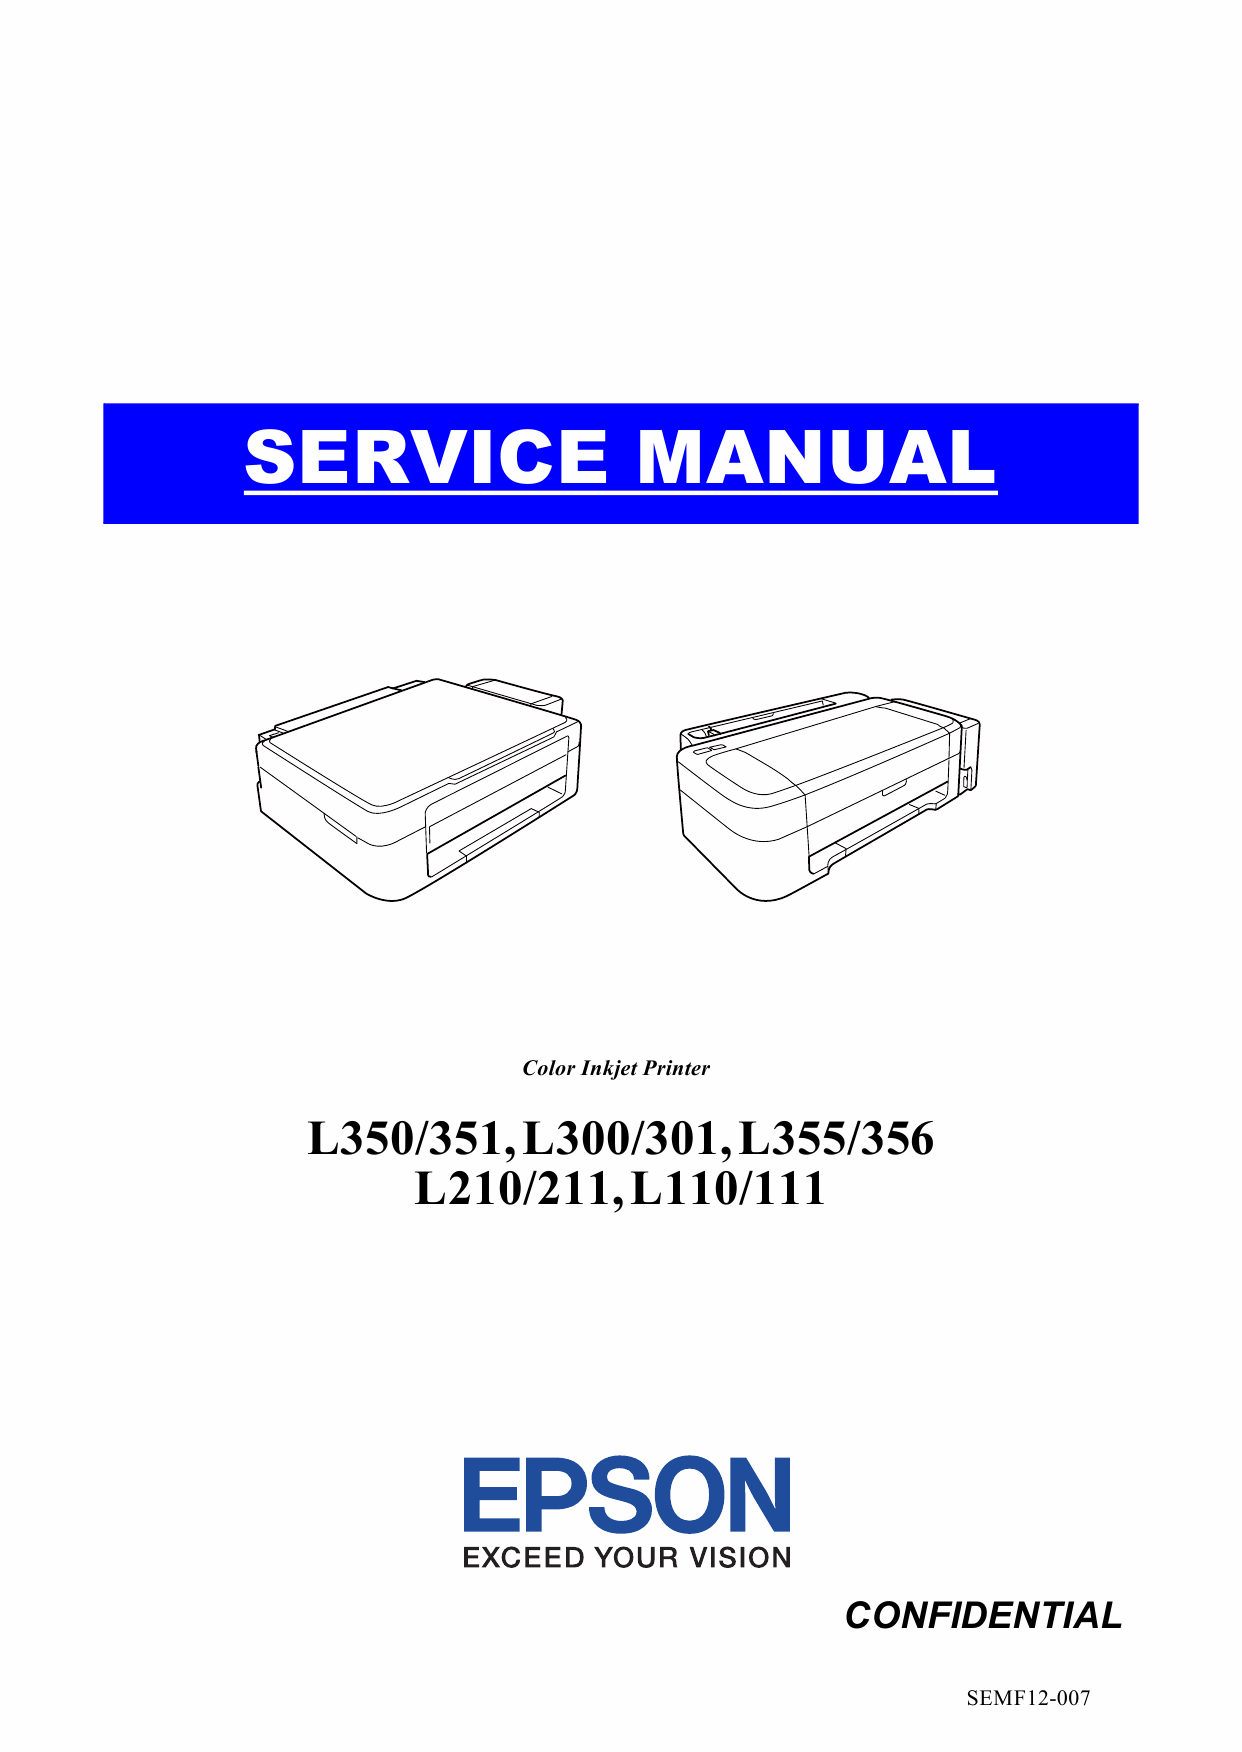 Epson L L110 111 210 211 300 301 350 351 L355 356 Service Manual-1